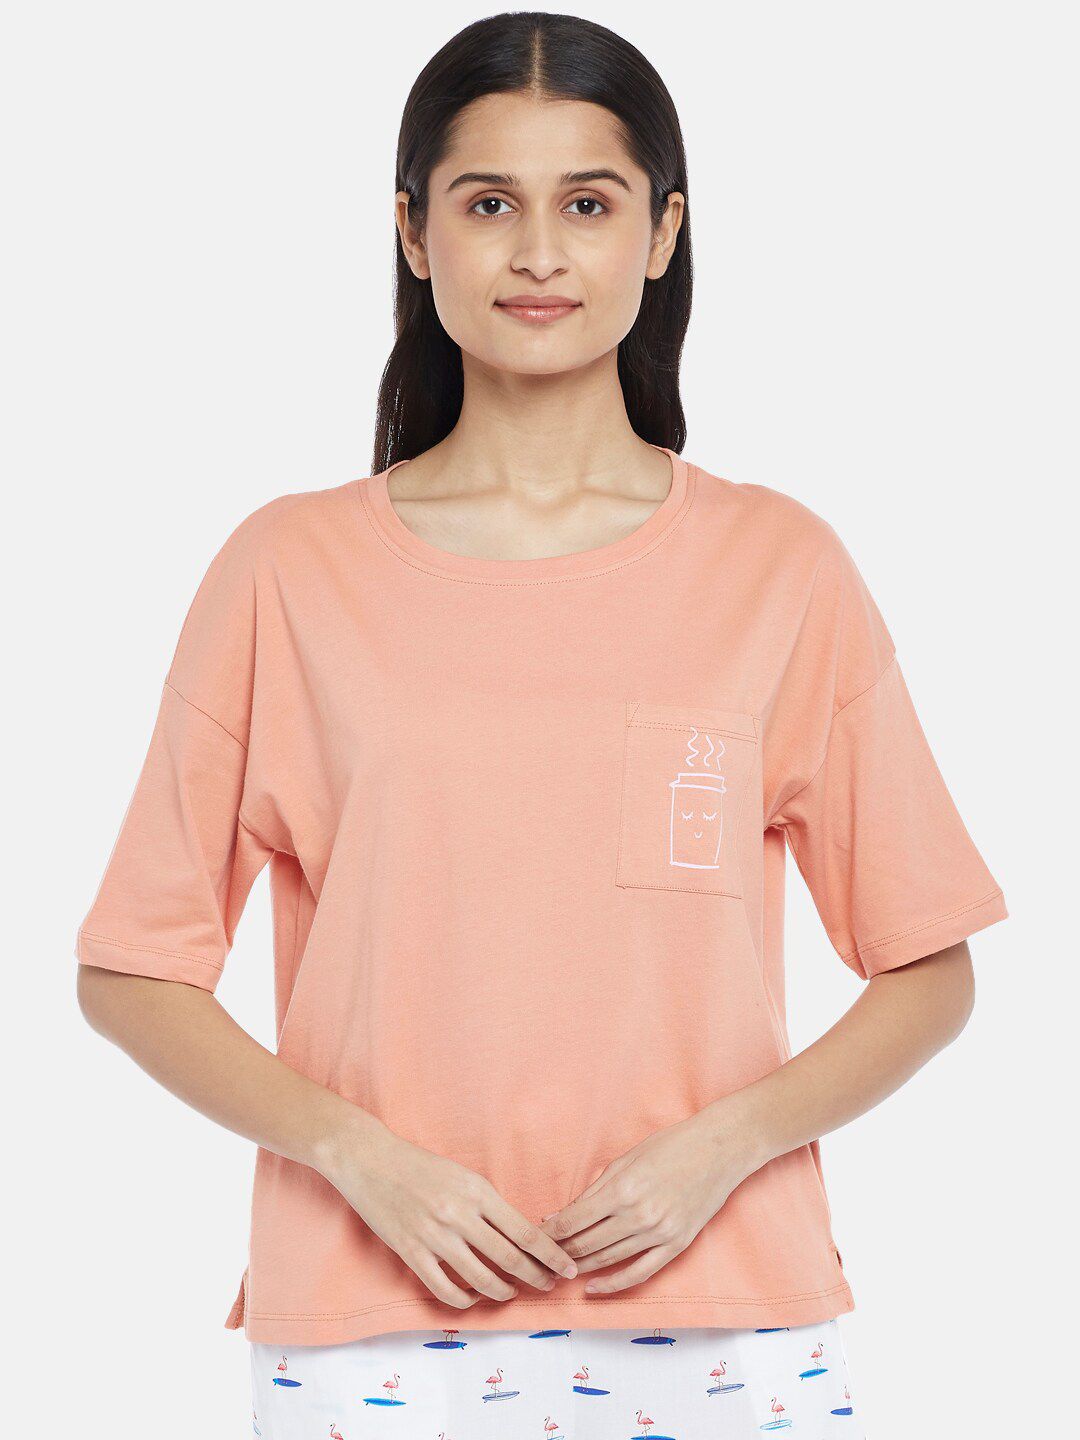 Dreamz by Pantaloons Orange Printed Back Lounge T-shirt Price in India